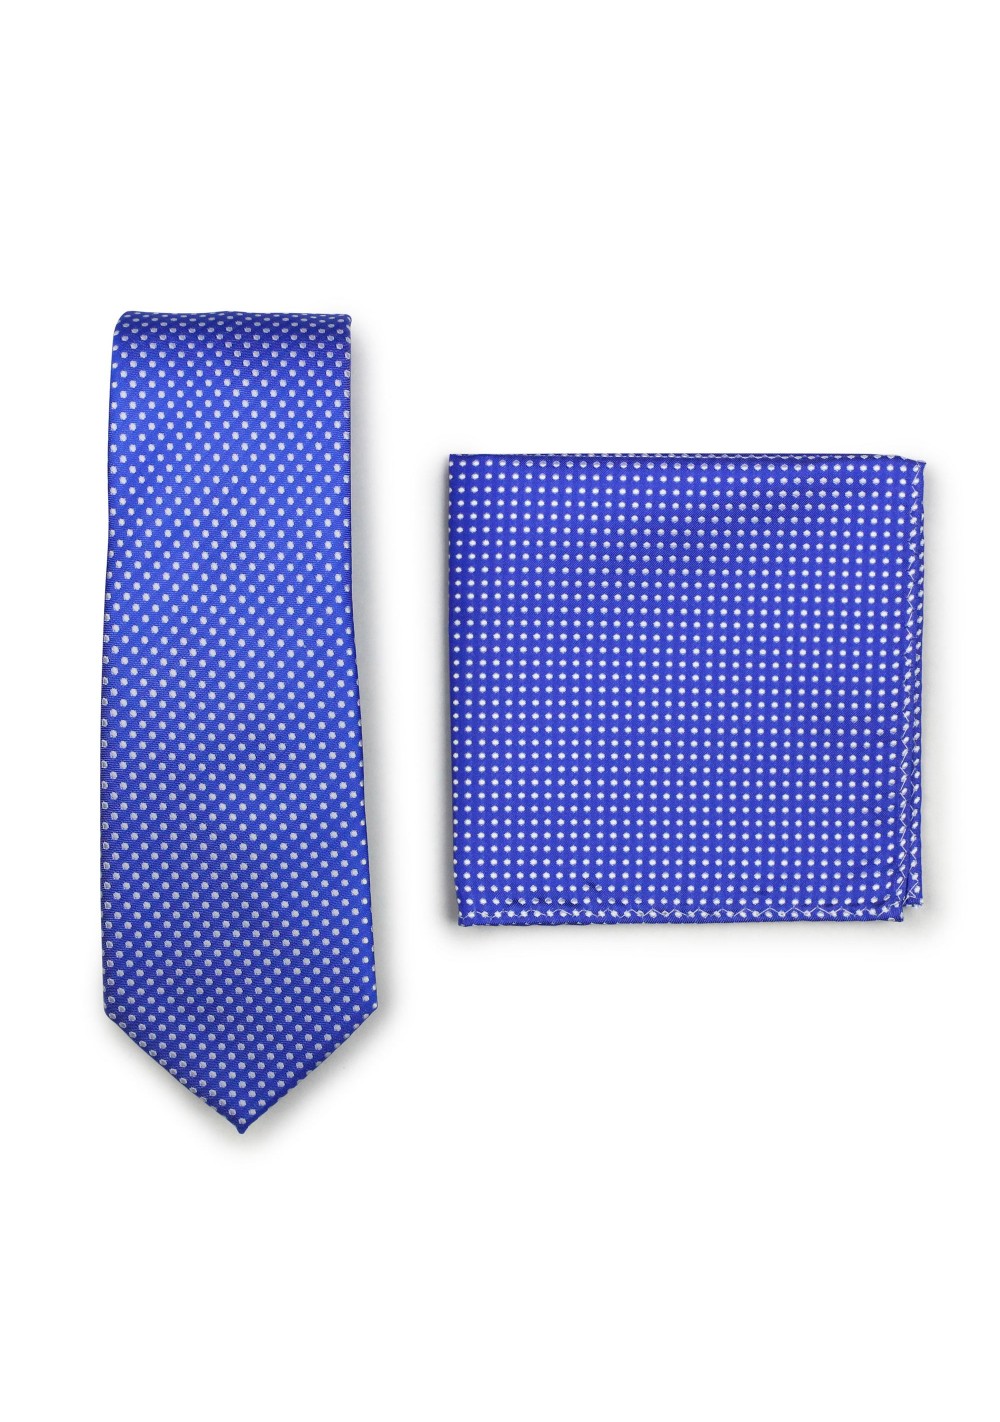 Horizon Blue Pin Dot Tie and Hanky Set